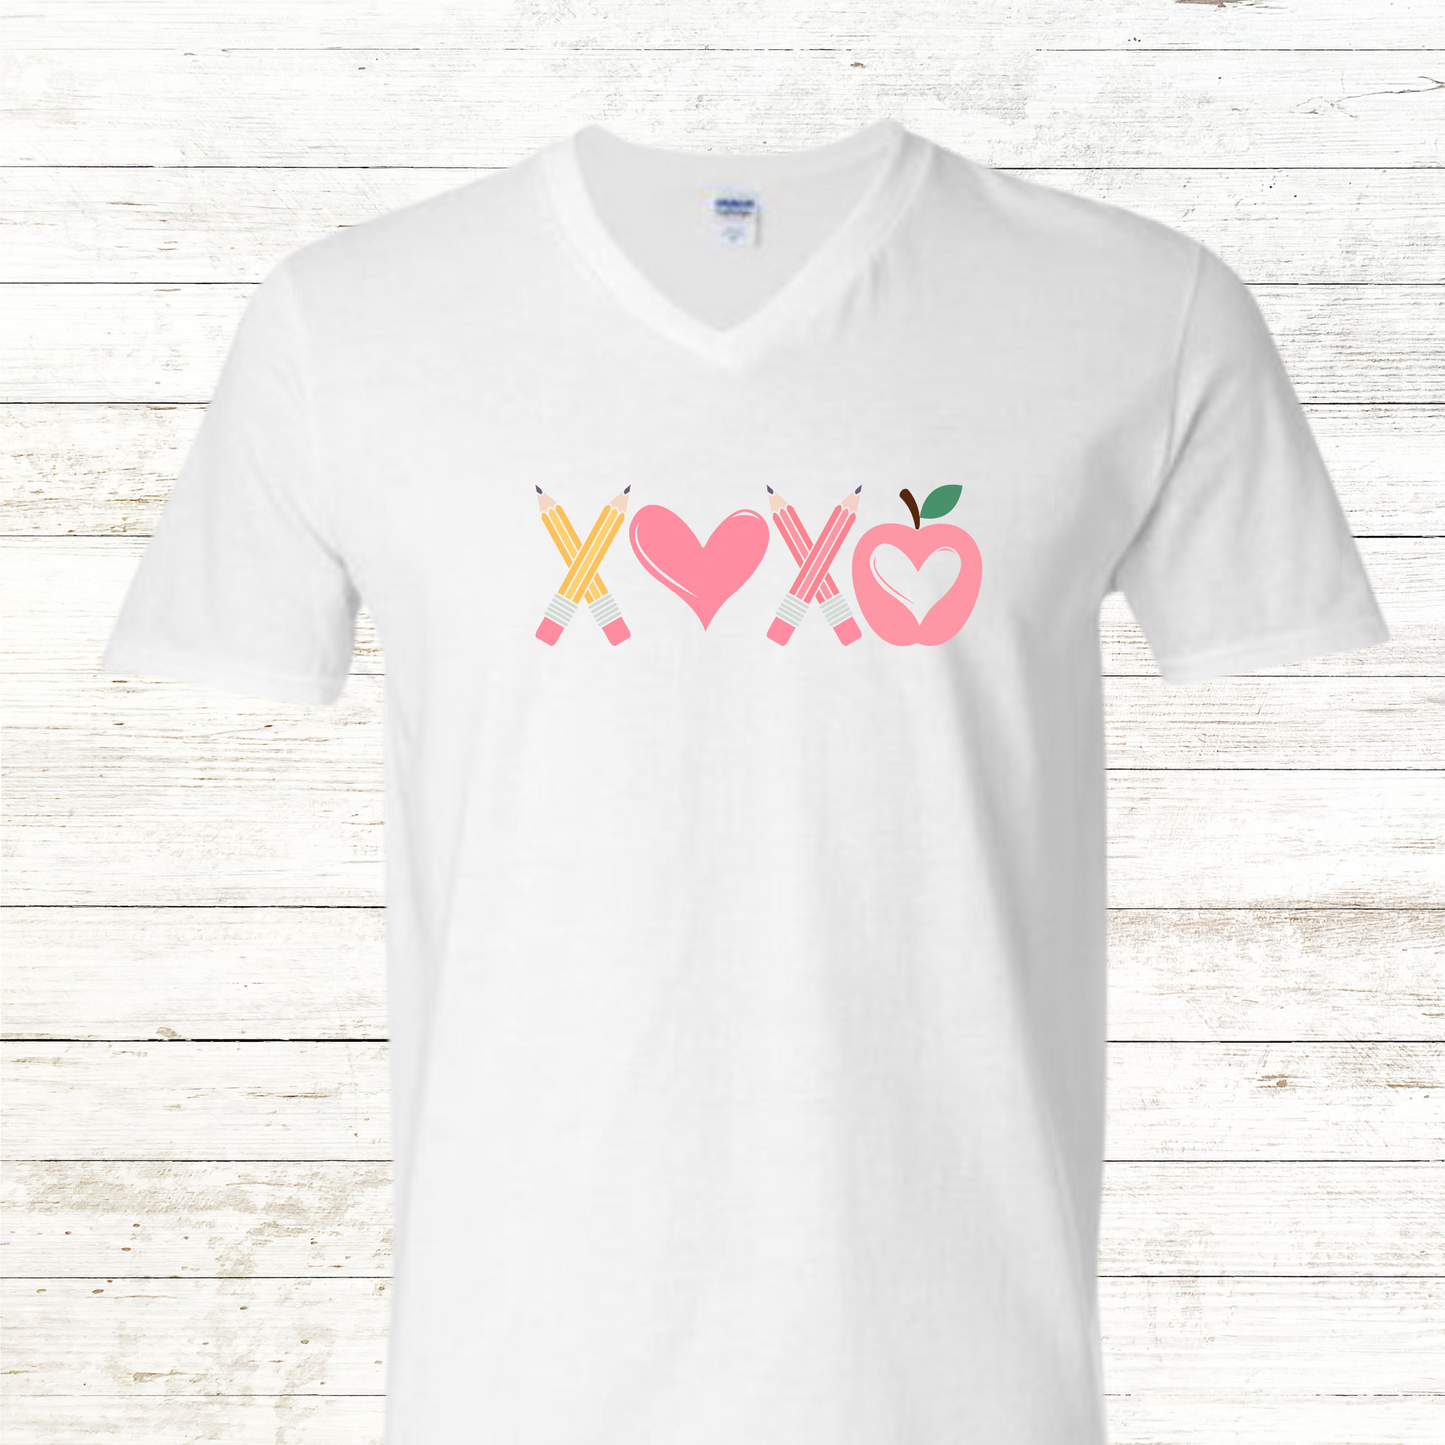 XOXO Pencils, Heart and Apples